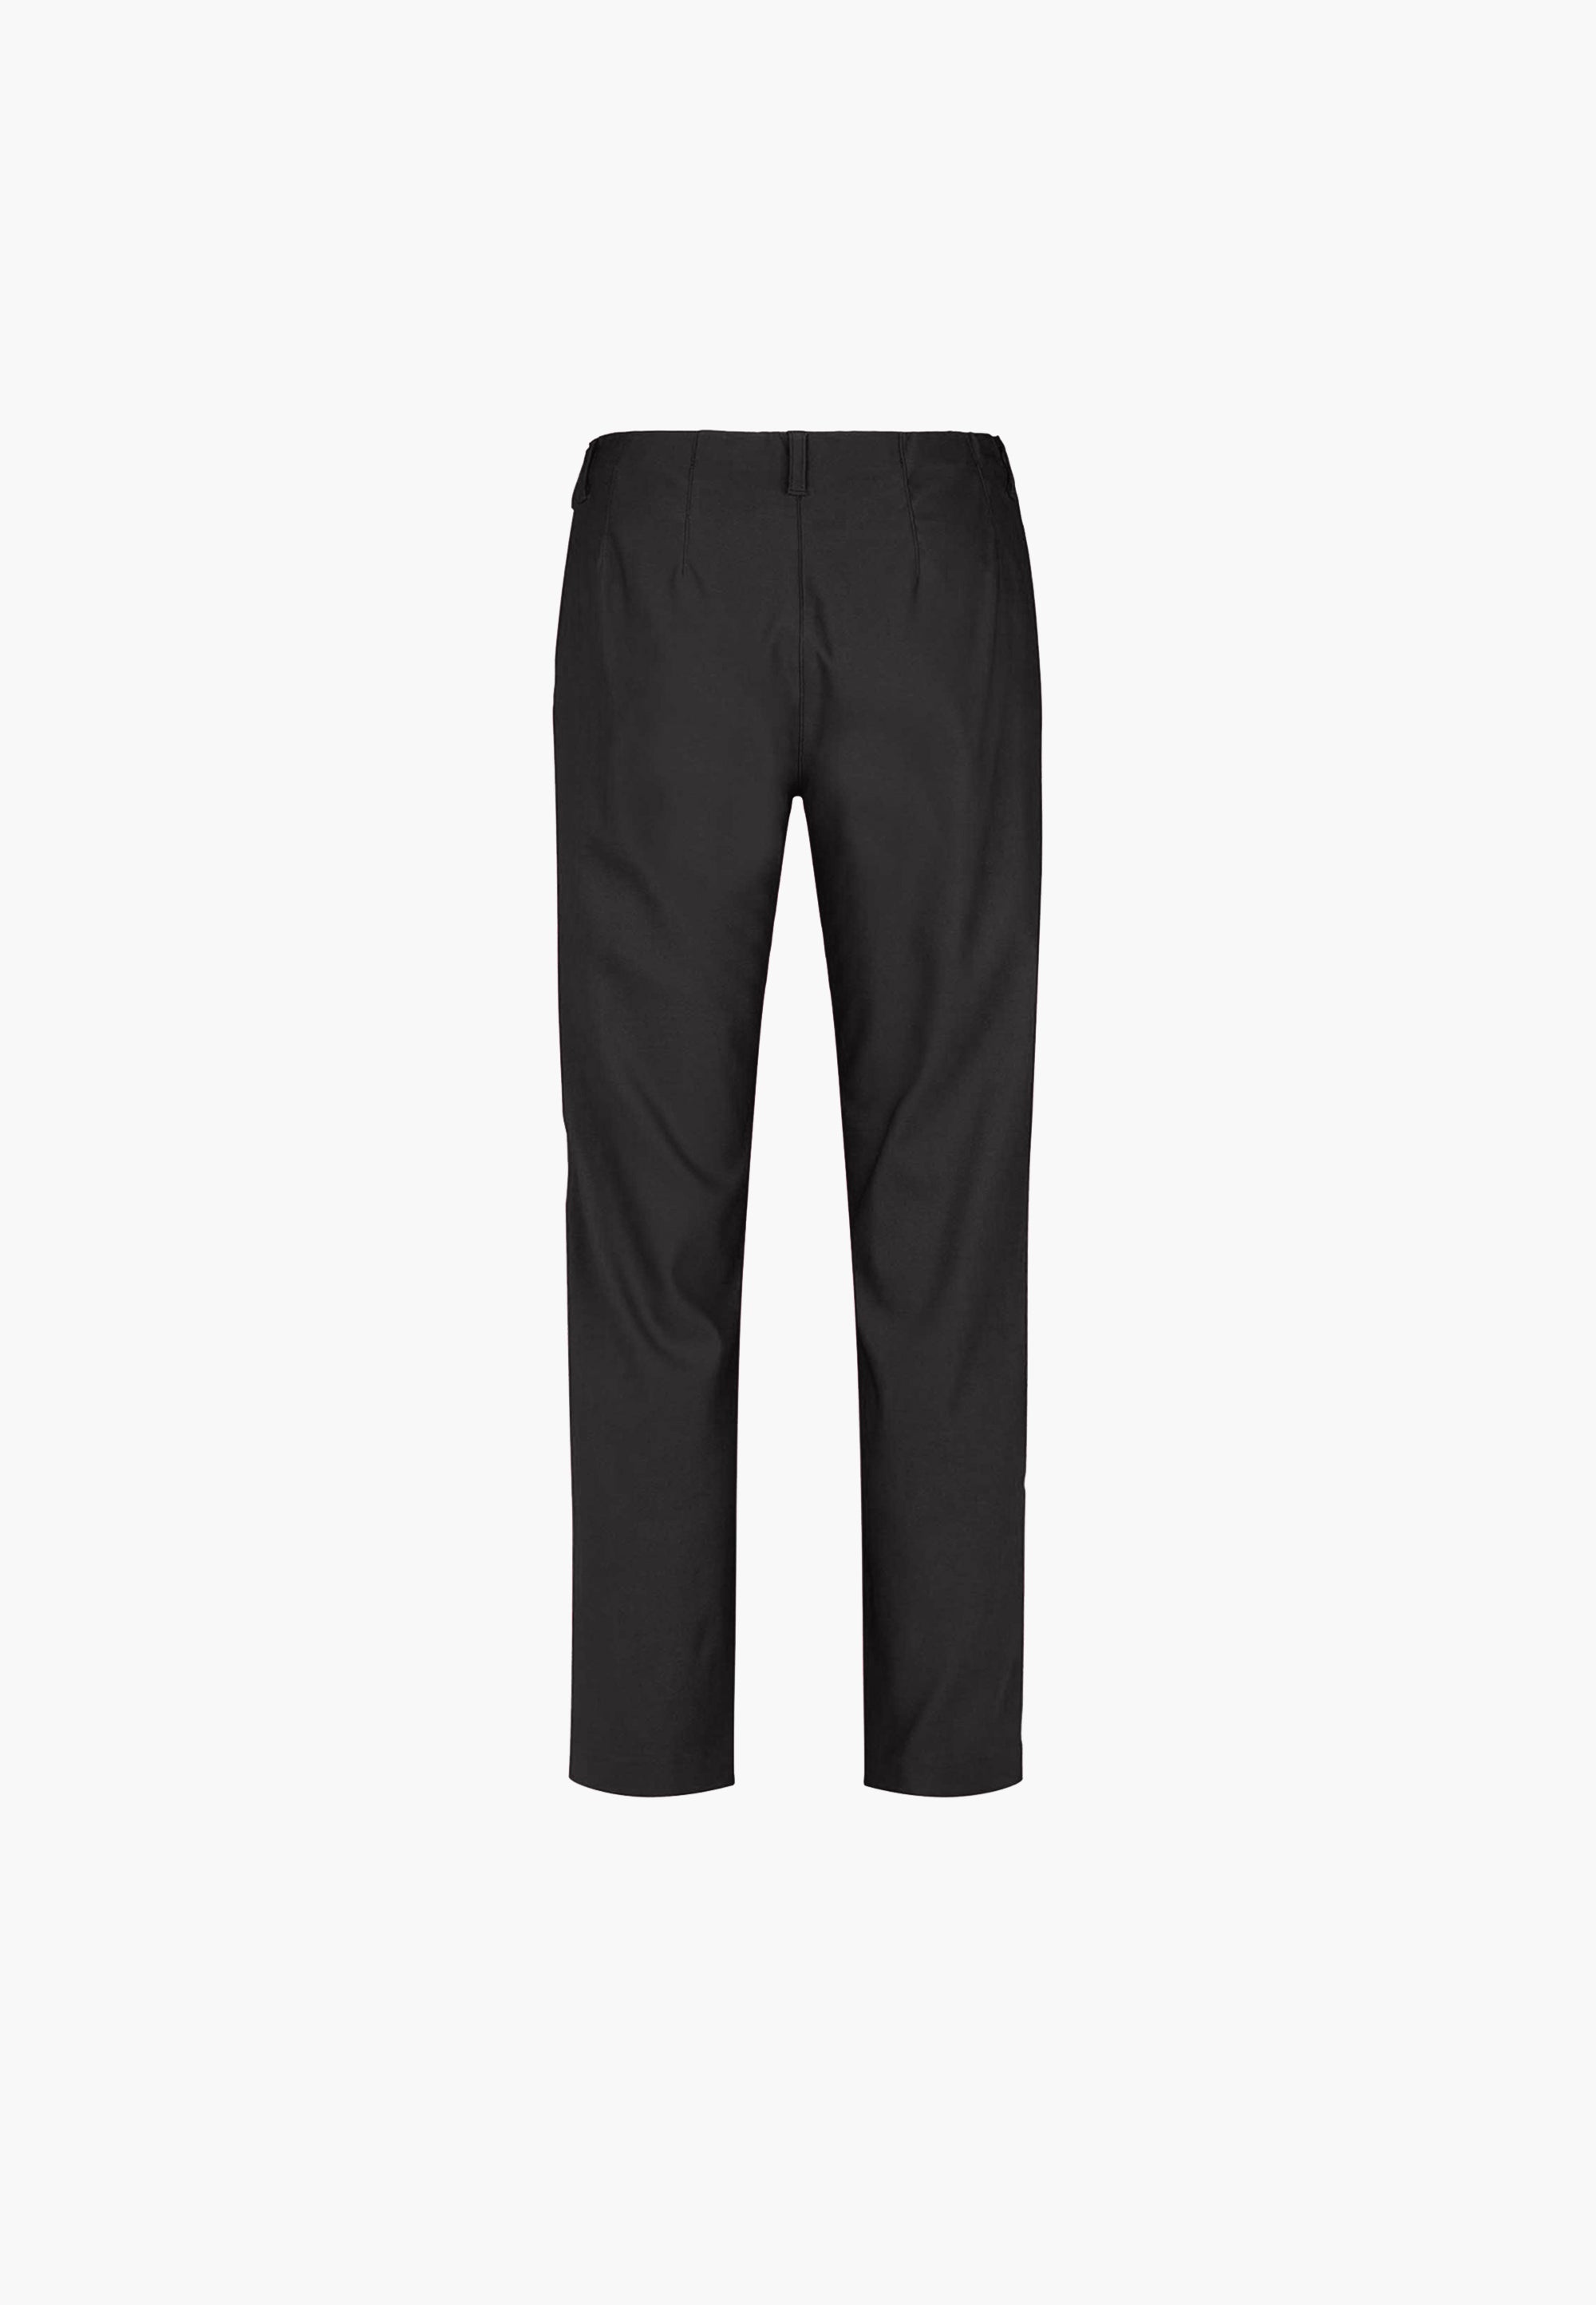 LAURIE  Taylor Regular - Short Length Trousers REGULAR 99000 Black